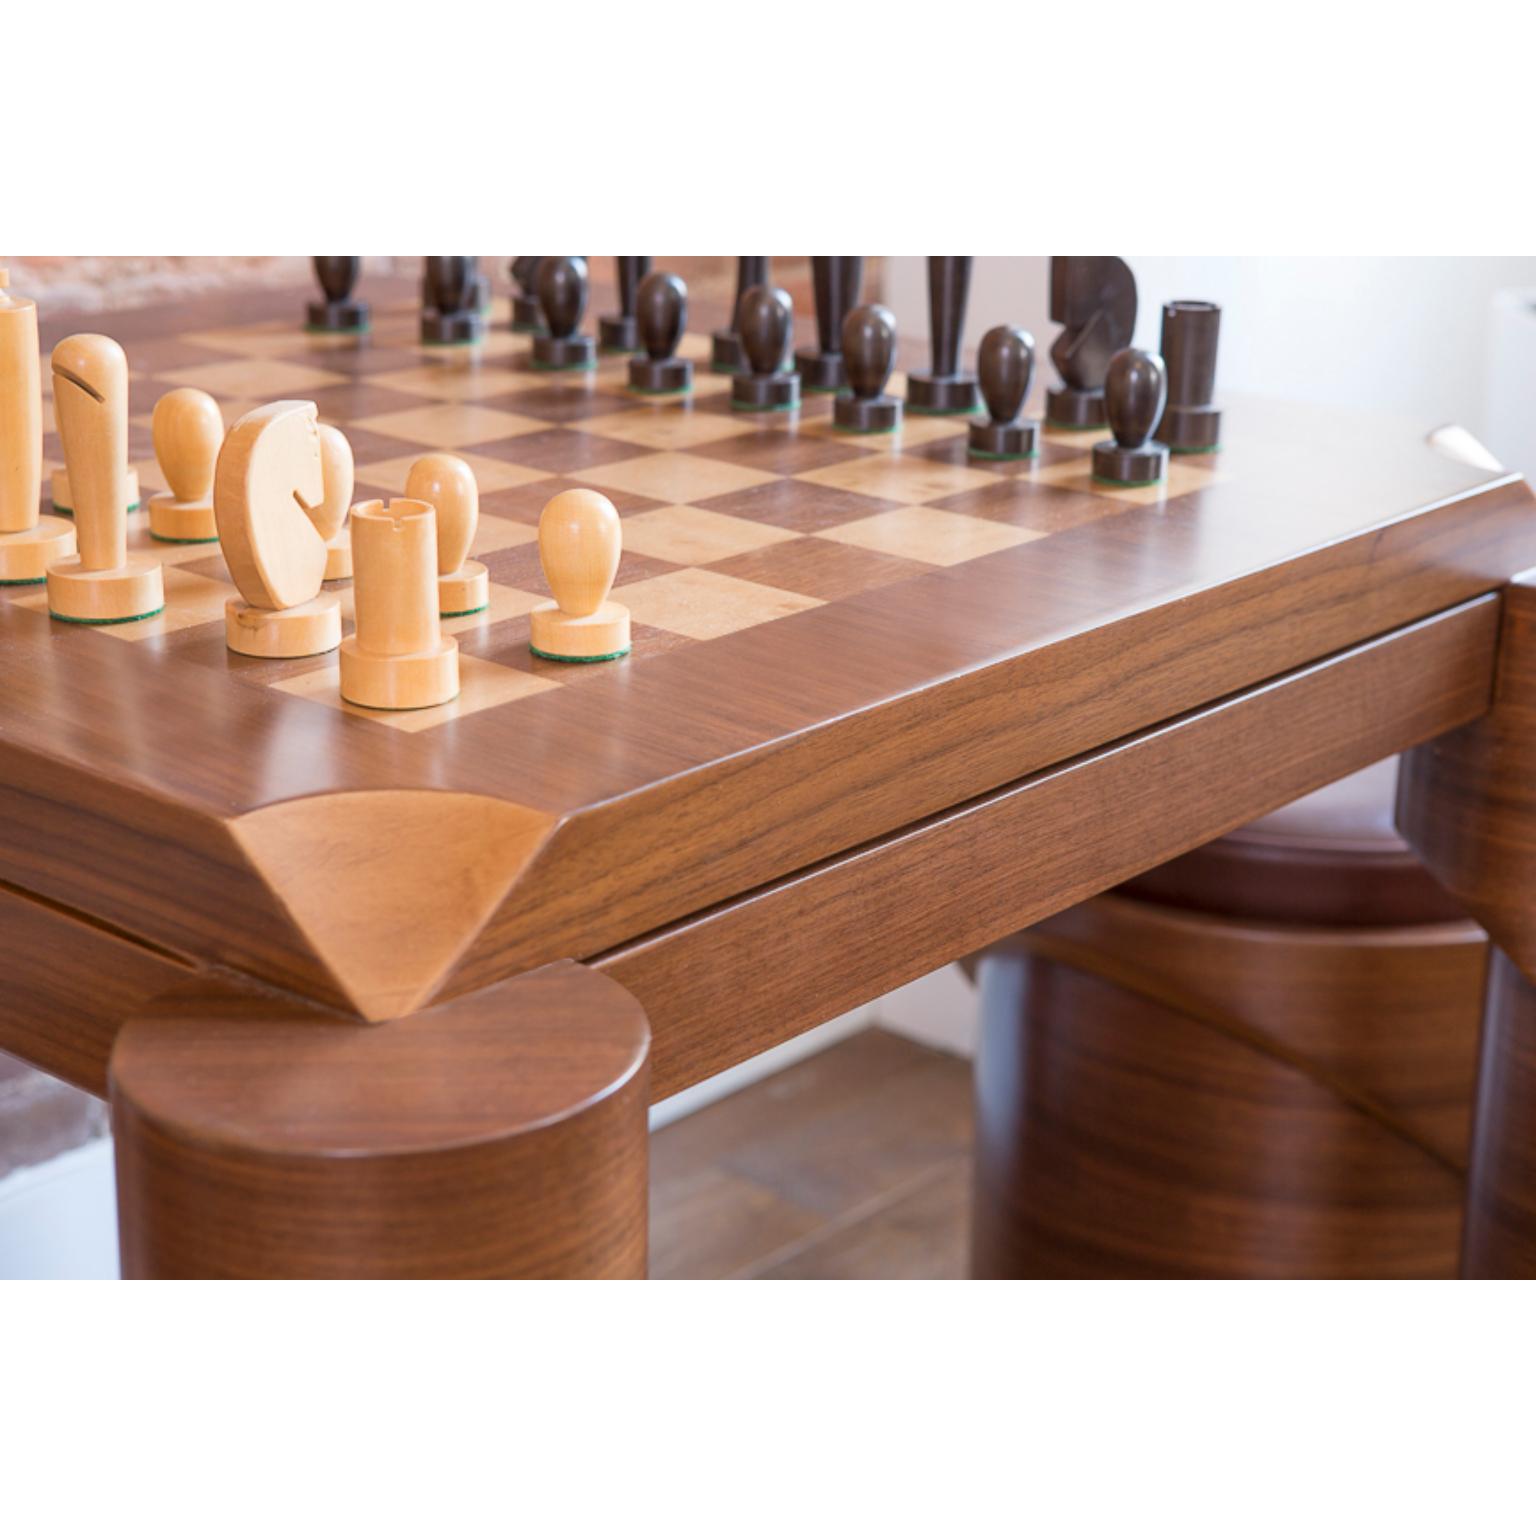 American Unique Matte Grandmaster’s Game Table by Ekin Varon For Sale